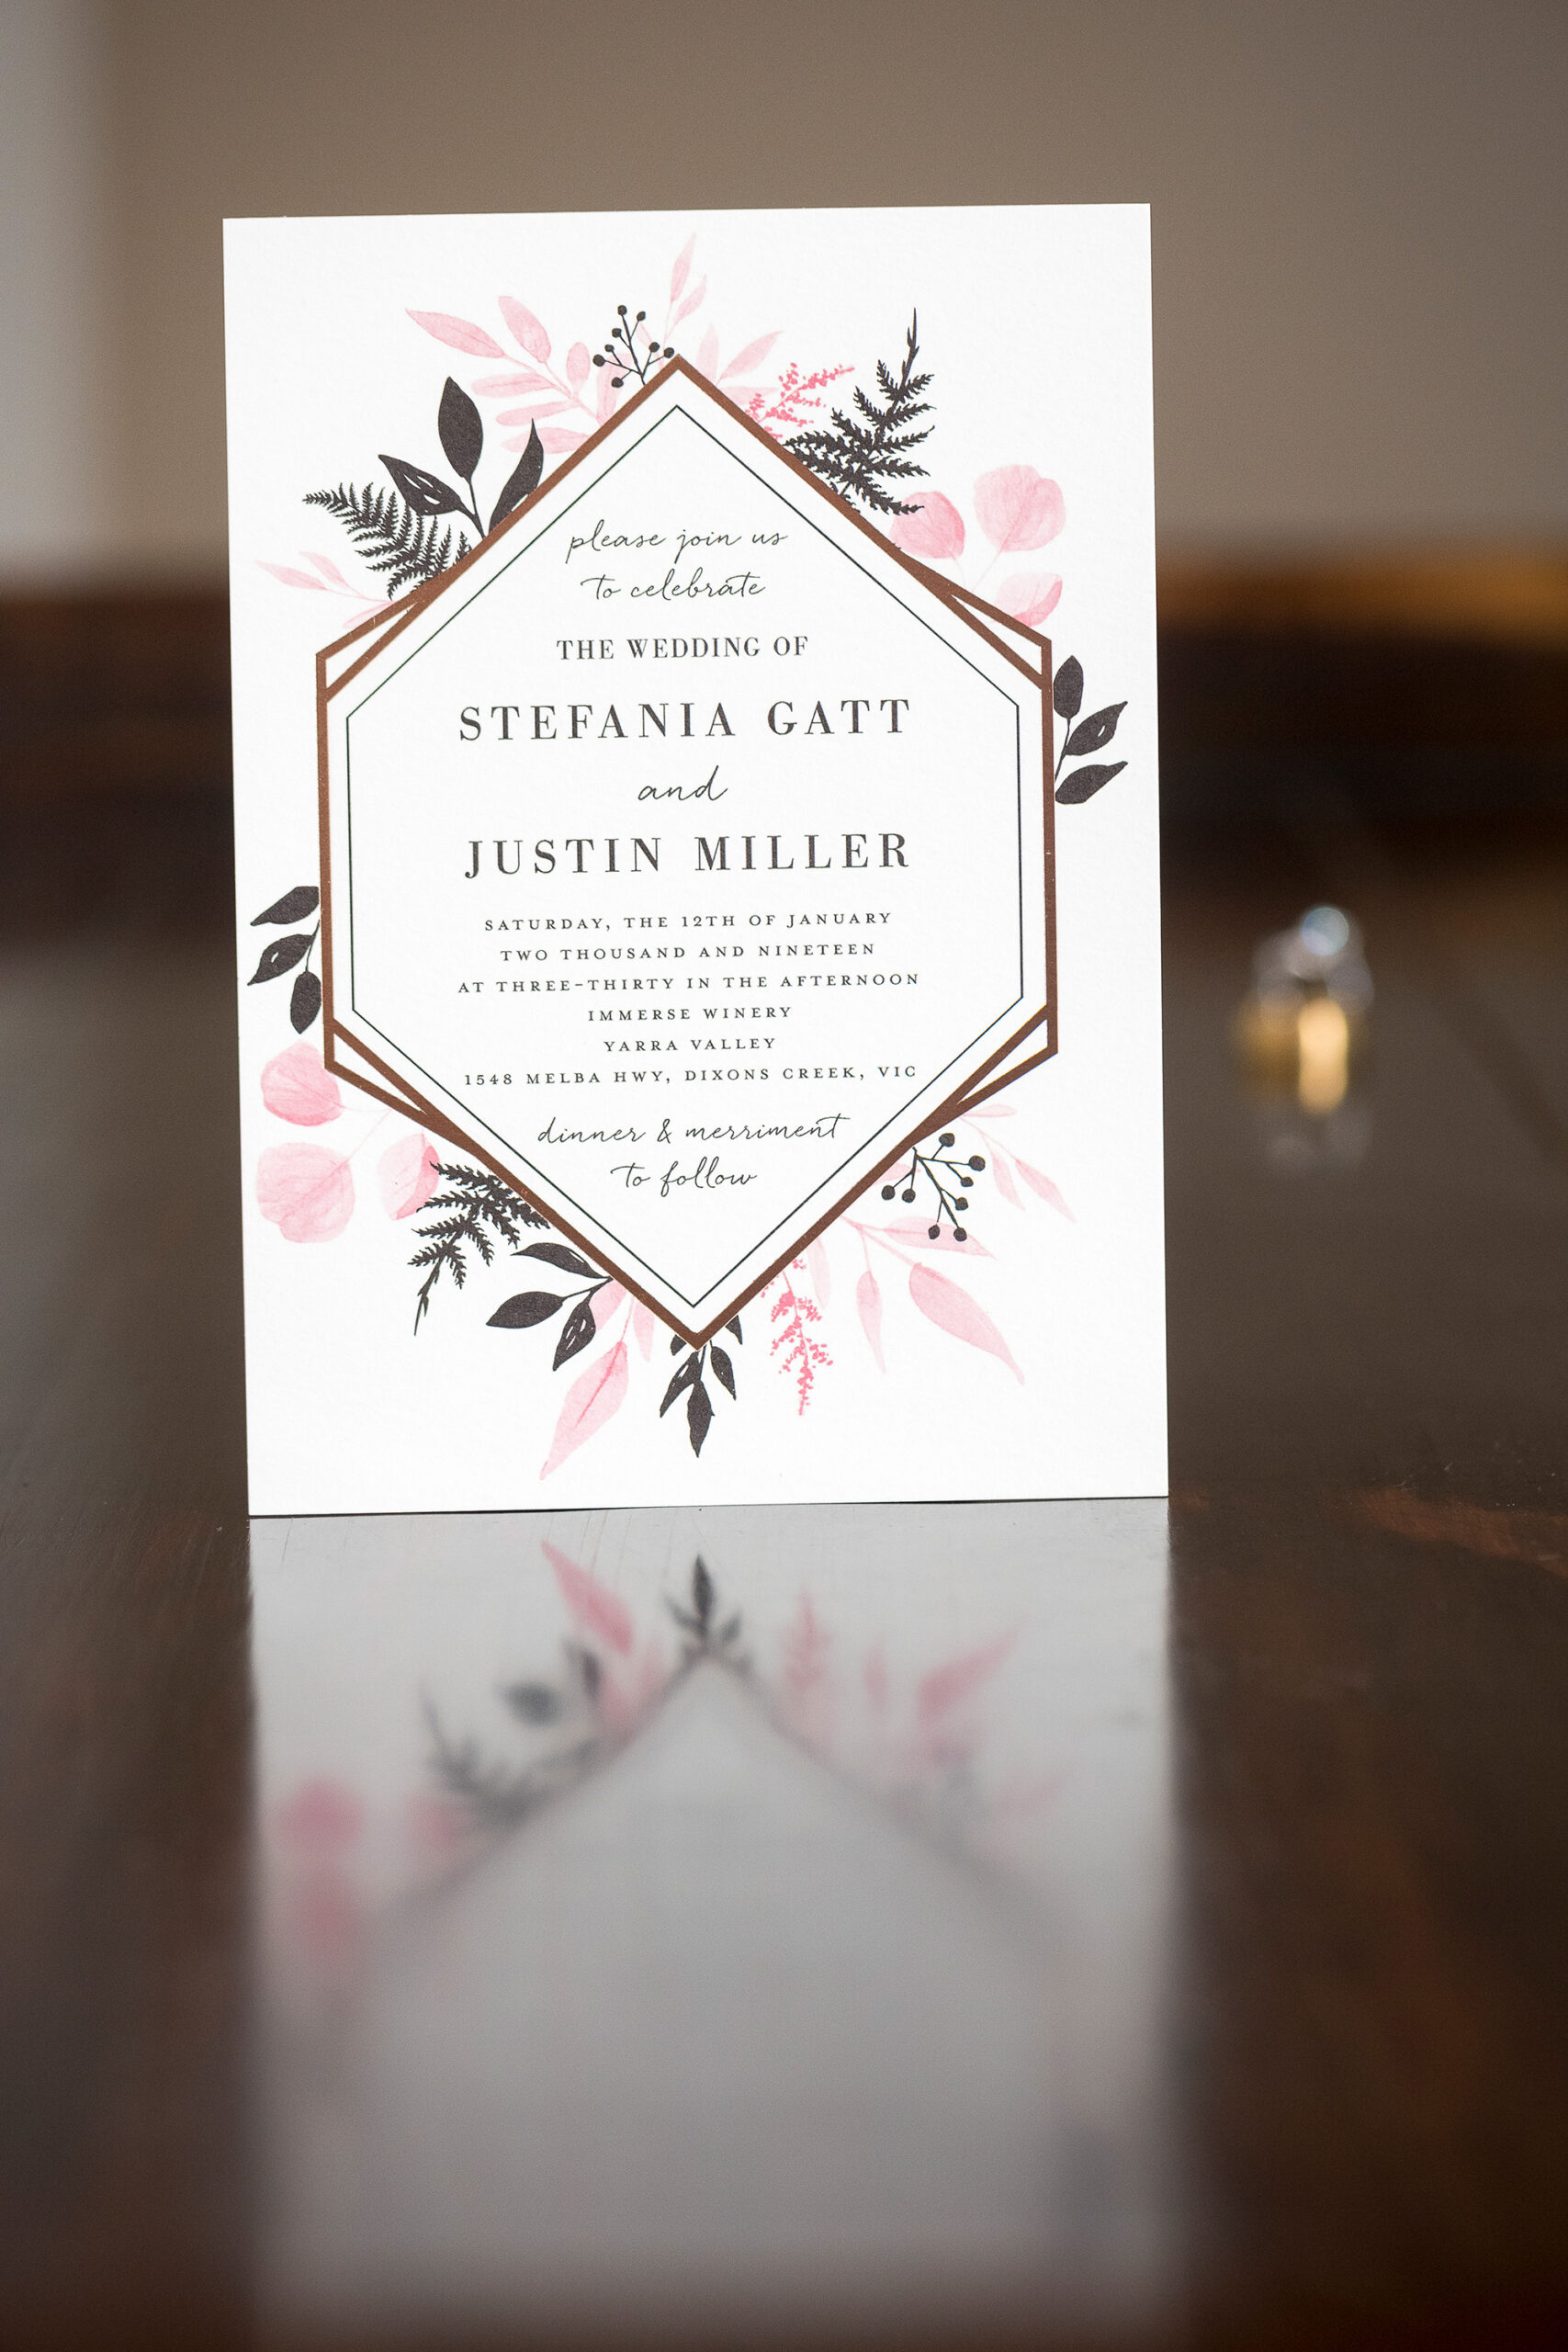 Stefania Justin Classic Winery Wedding Iain and Jo SBS 005 scaled